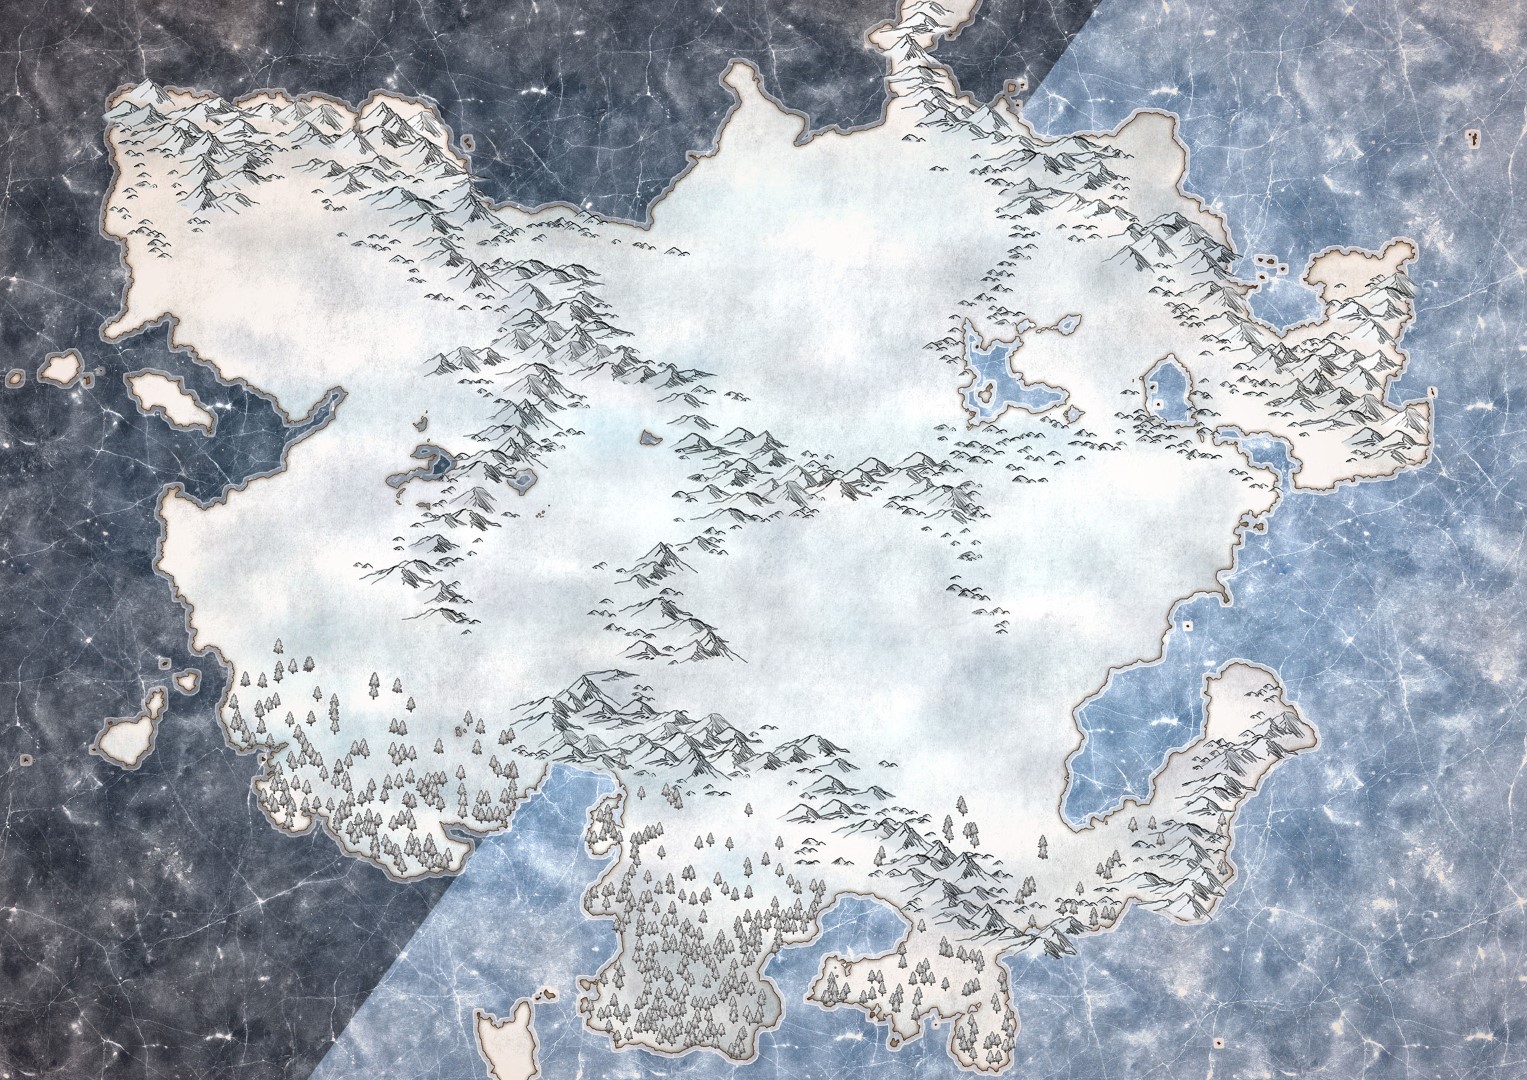 ice-map-example.jpg